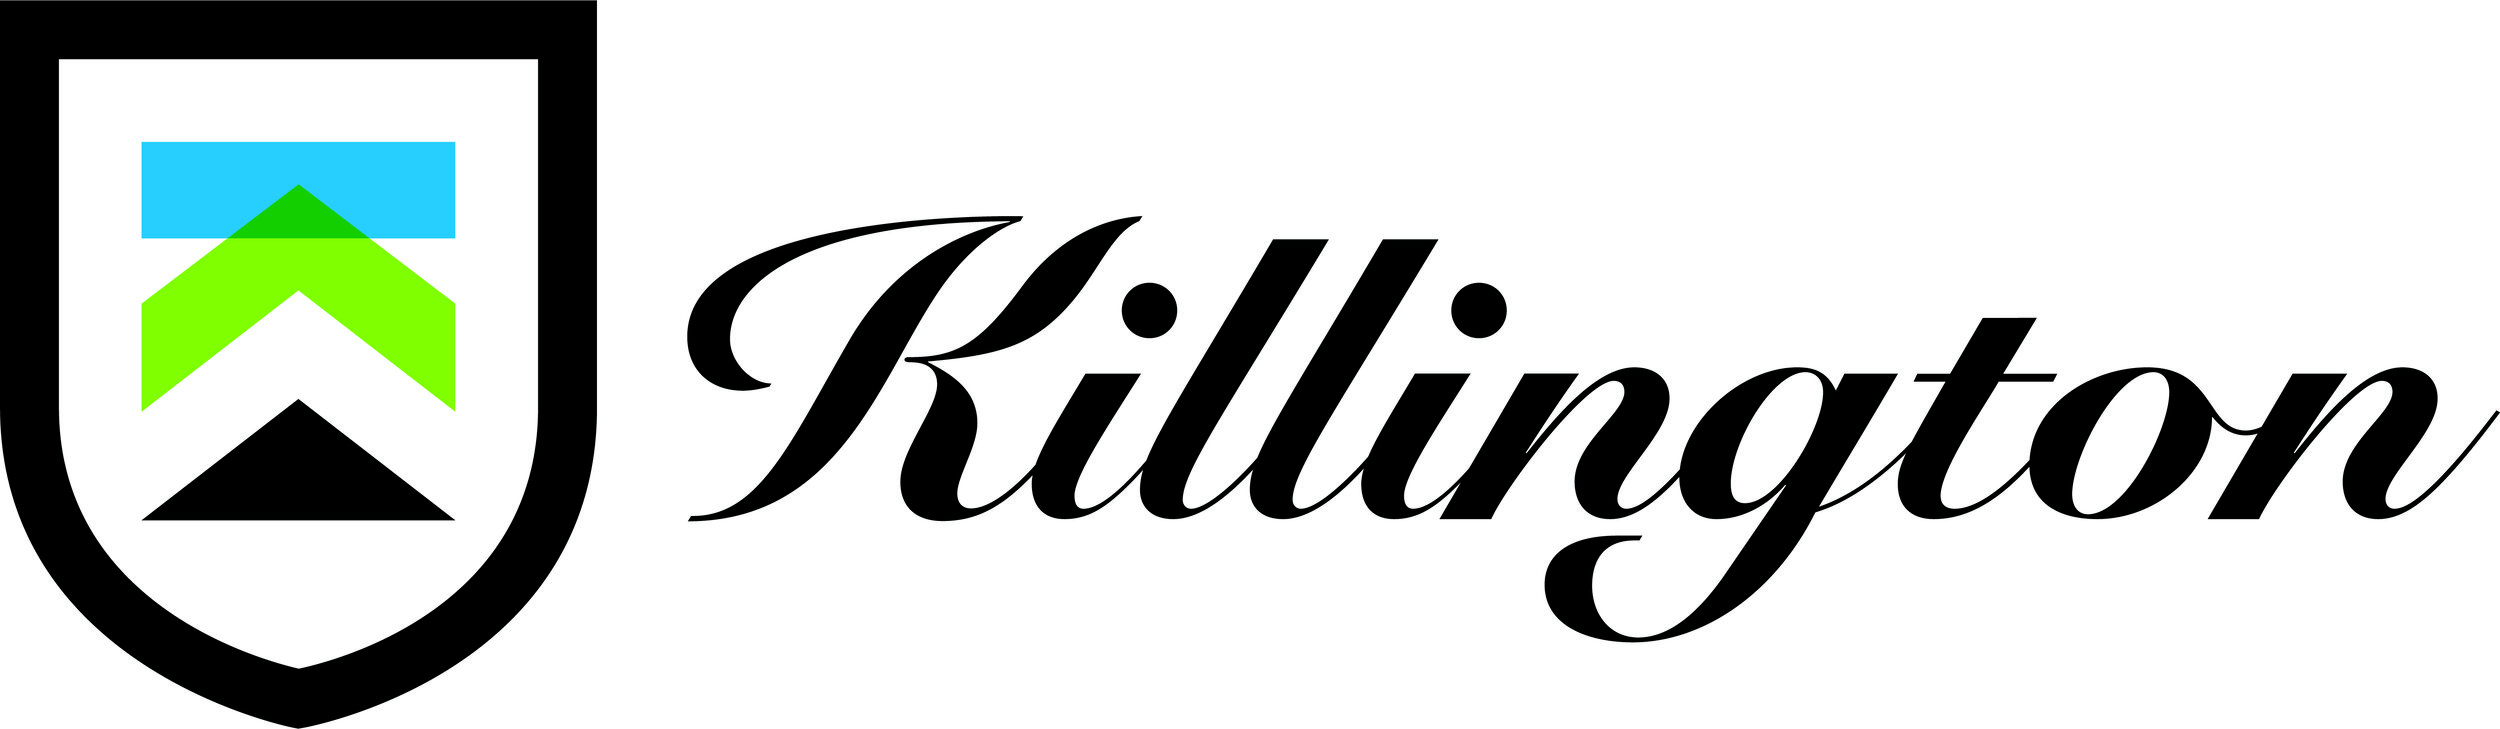 killington-horizontalCMYK-BLACK.jpg